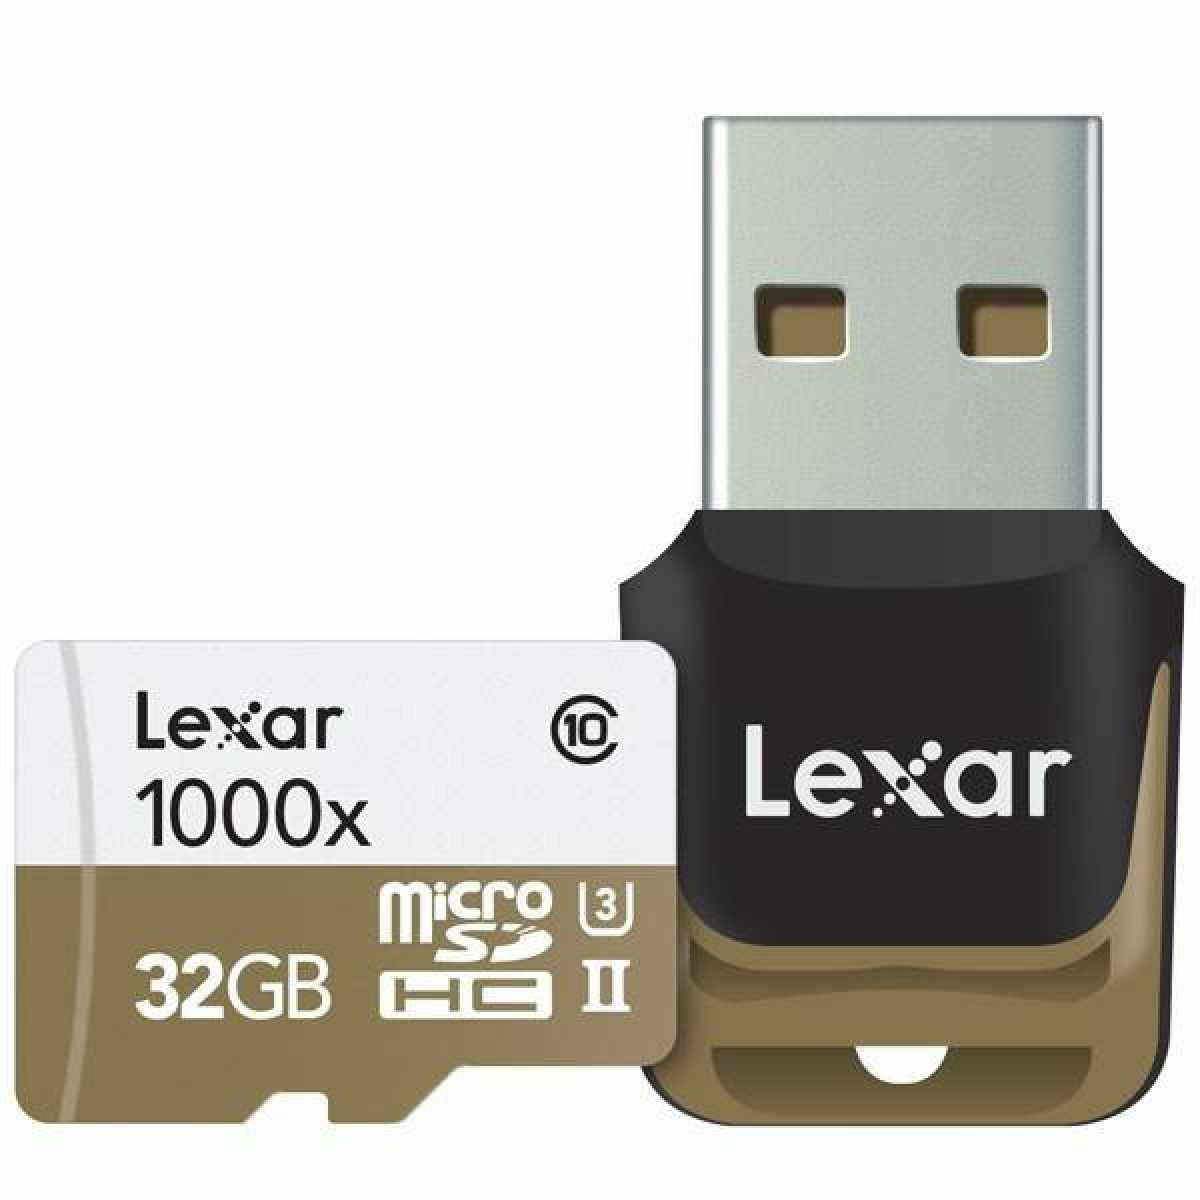 Lexar microSDHC 32GB 1000x 150mb/s UHS-II with USB 3.0 Reader microSD memorijska kartica + USB čitač LSDMI32GCBEU1000R